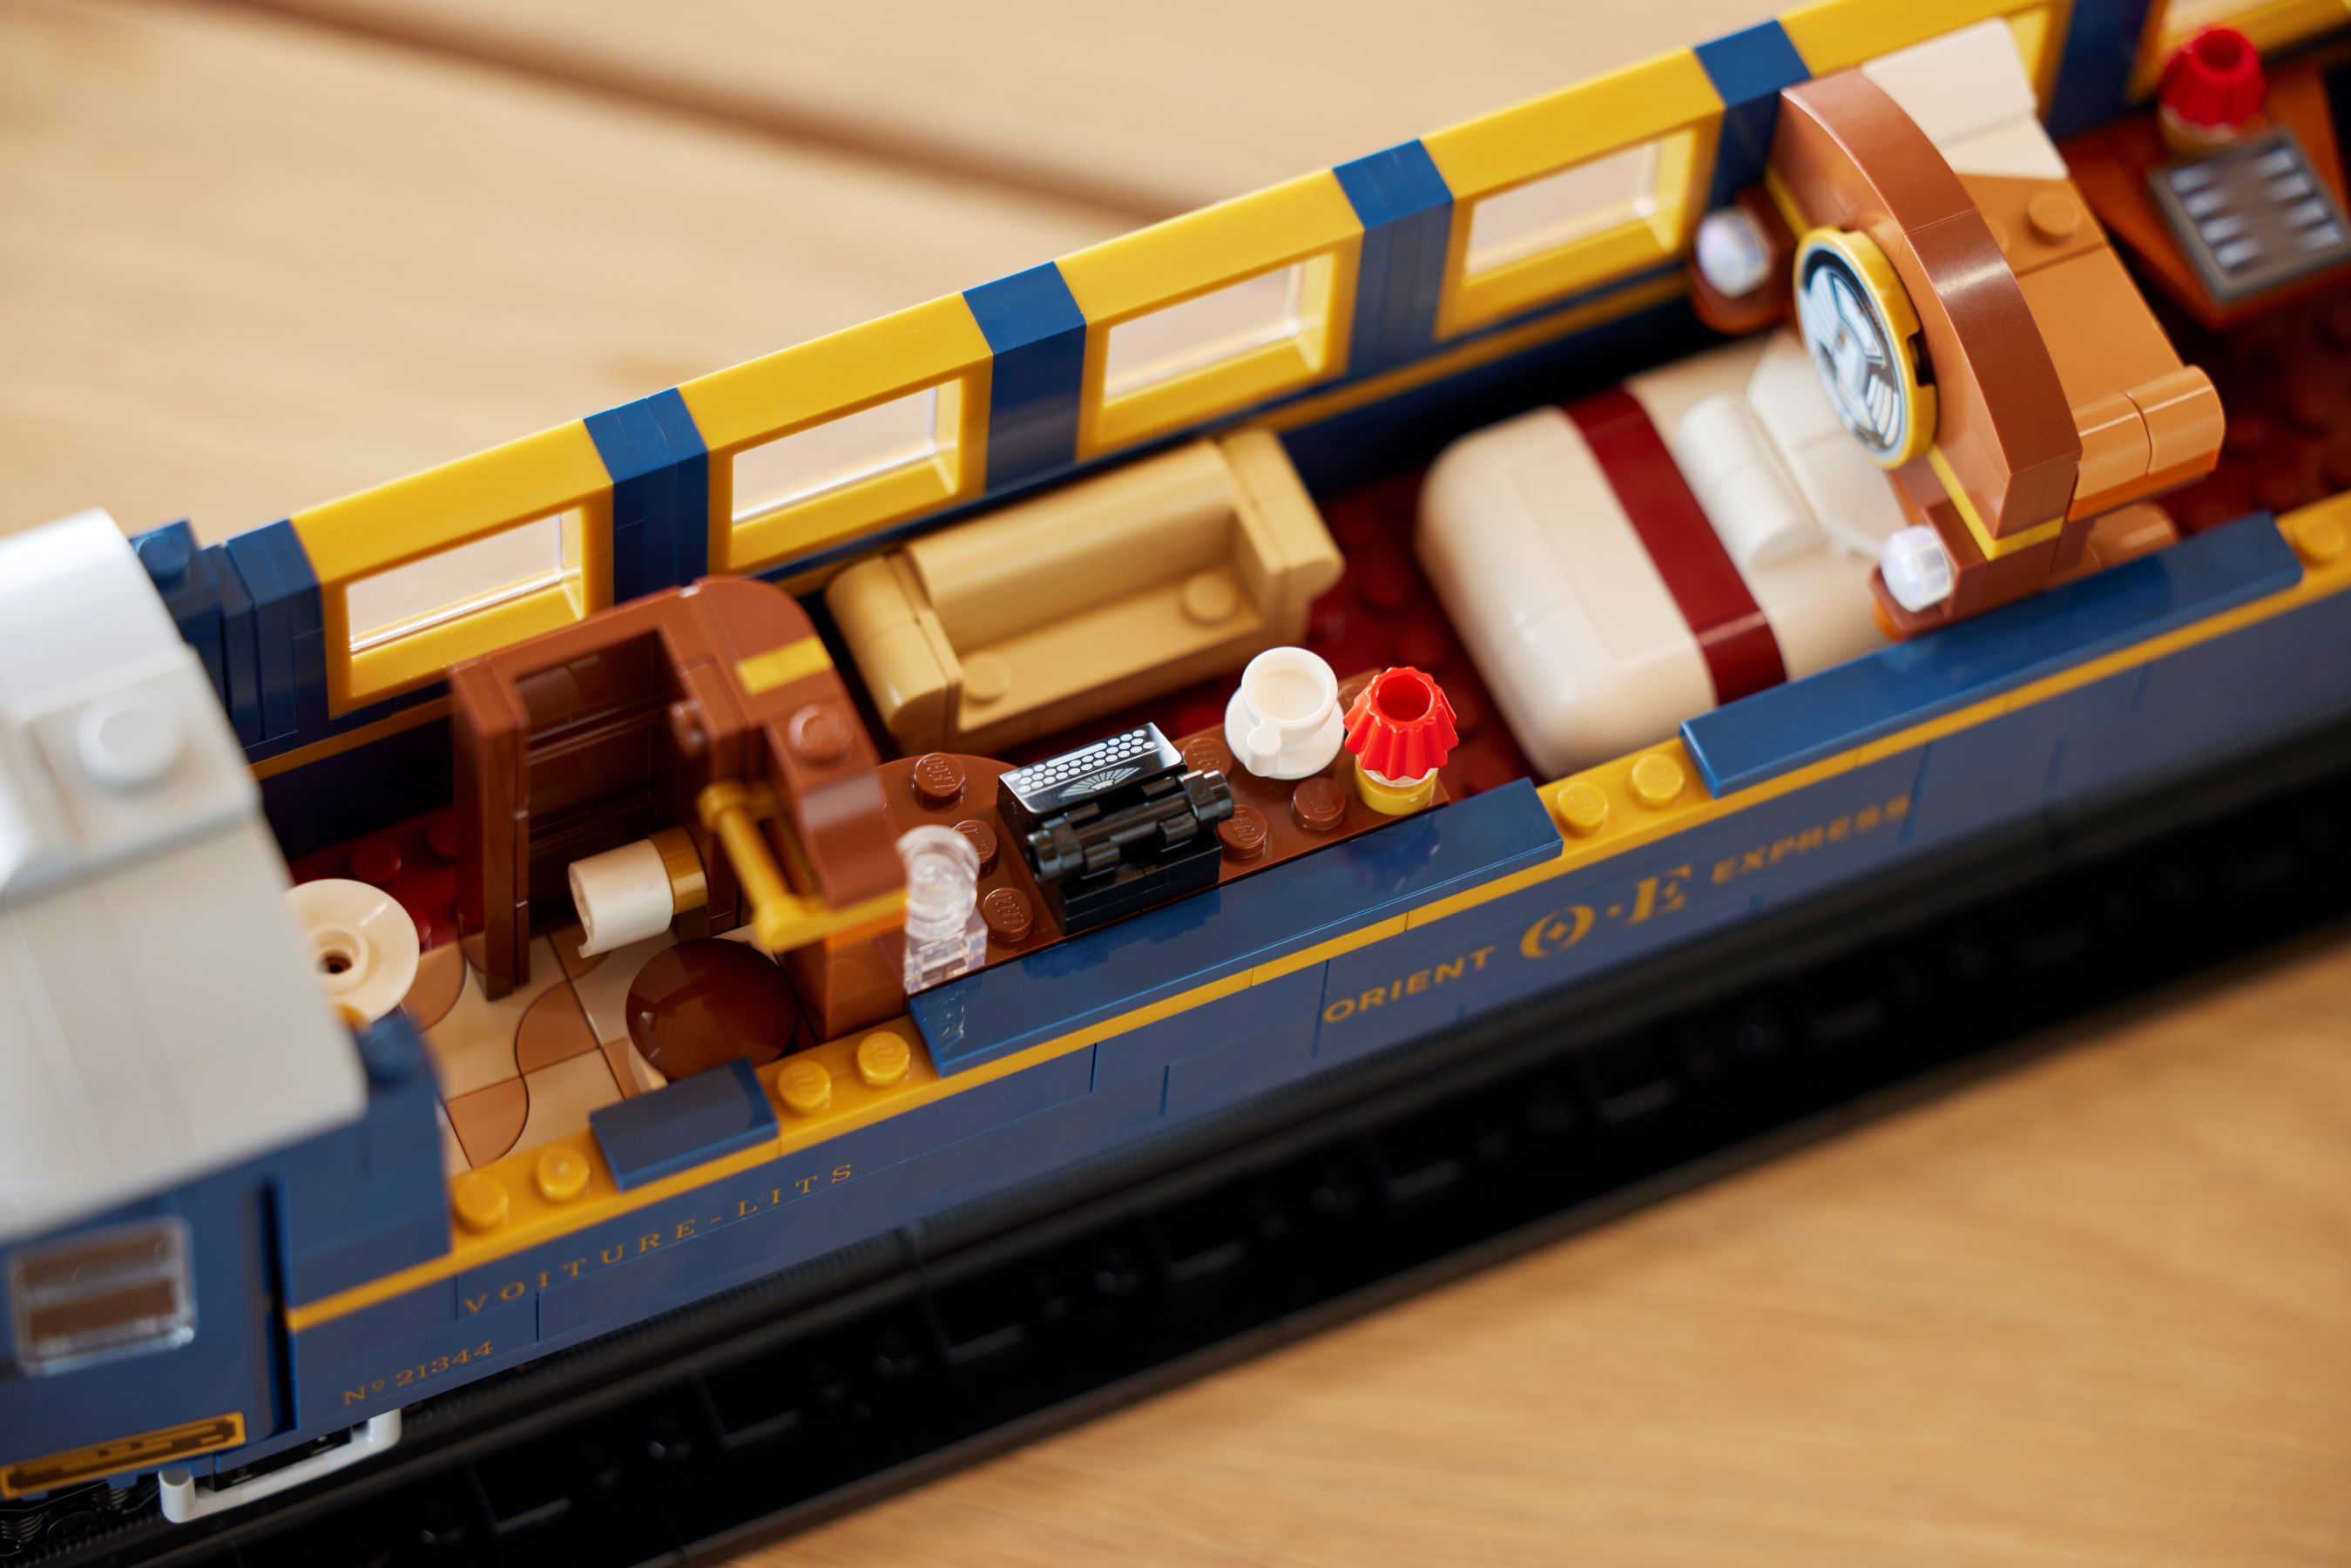 The Orient Express Train 21344, Ideas